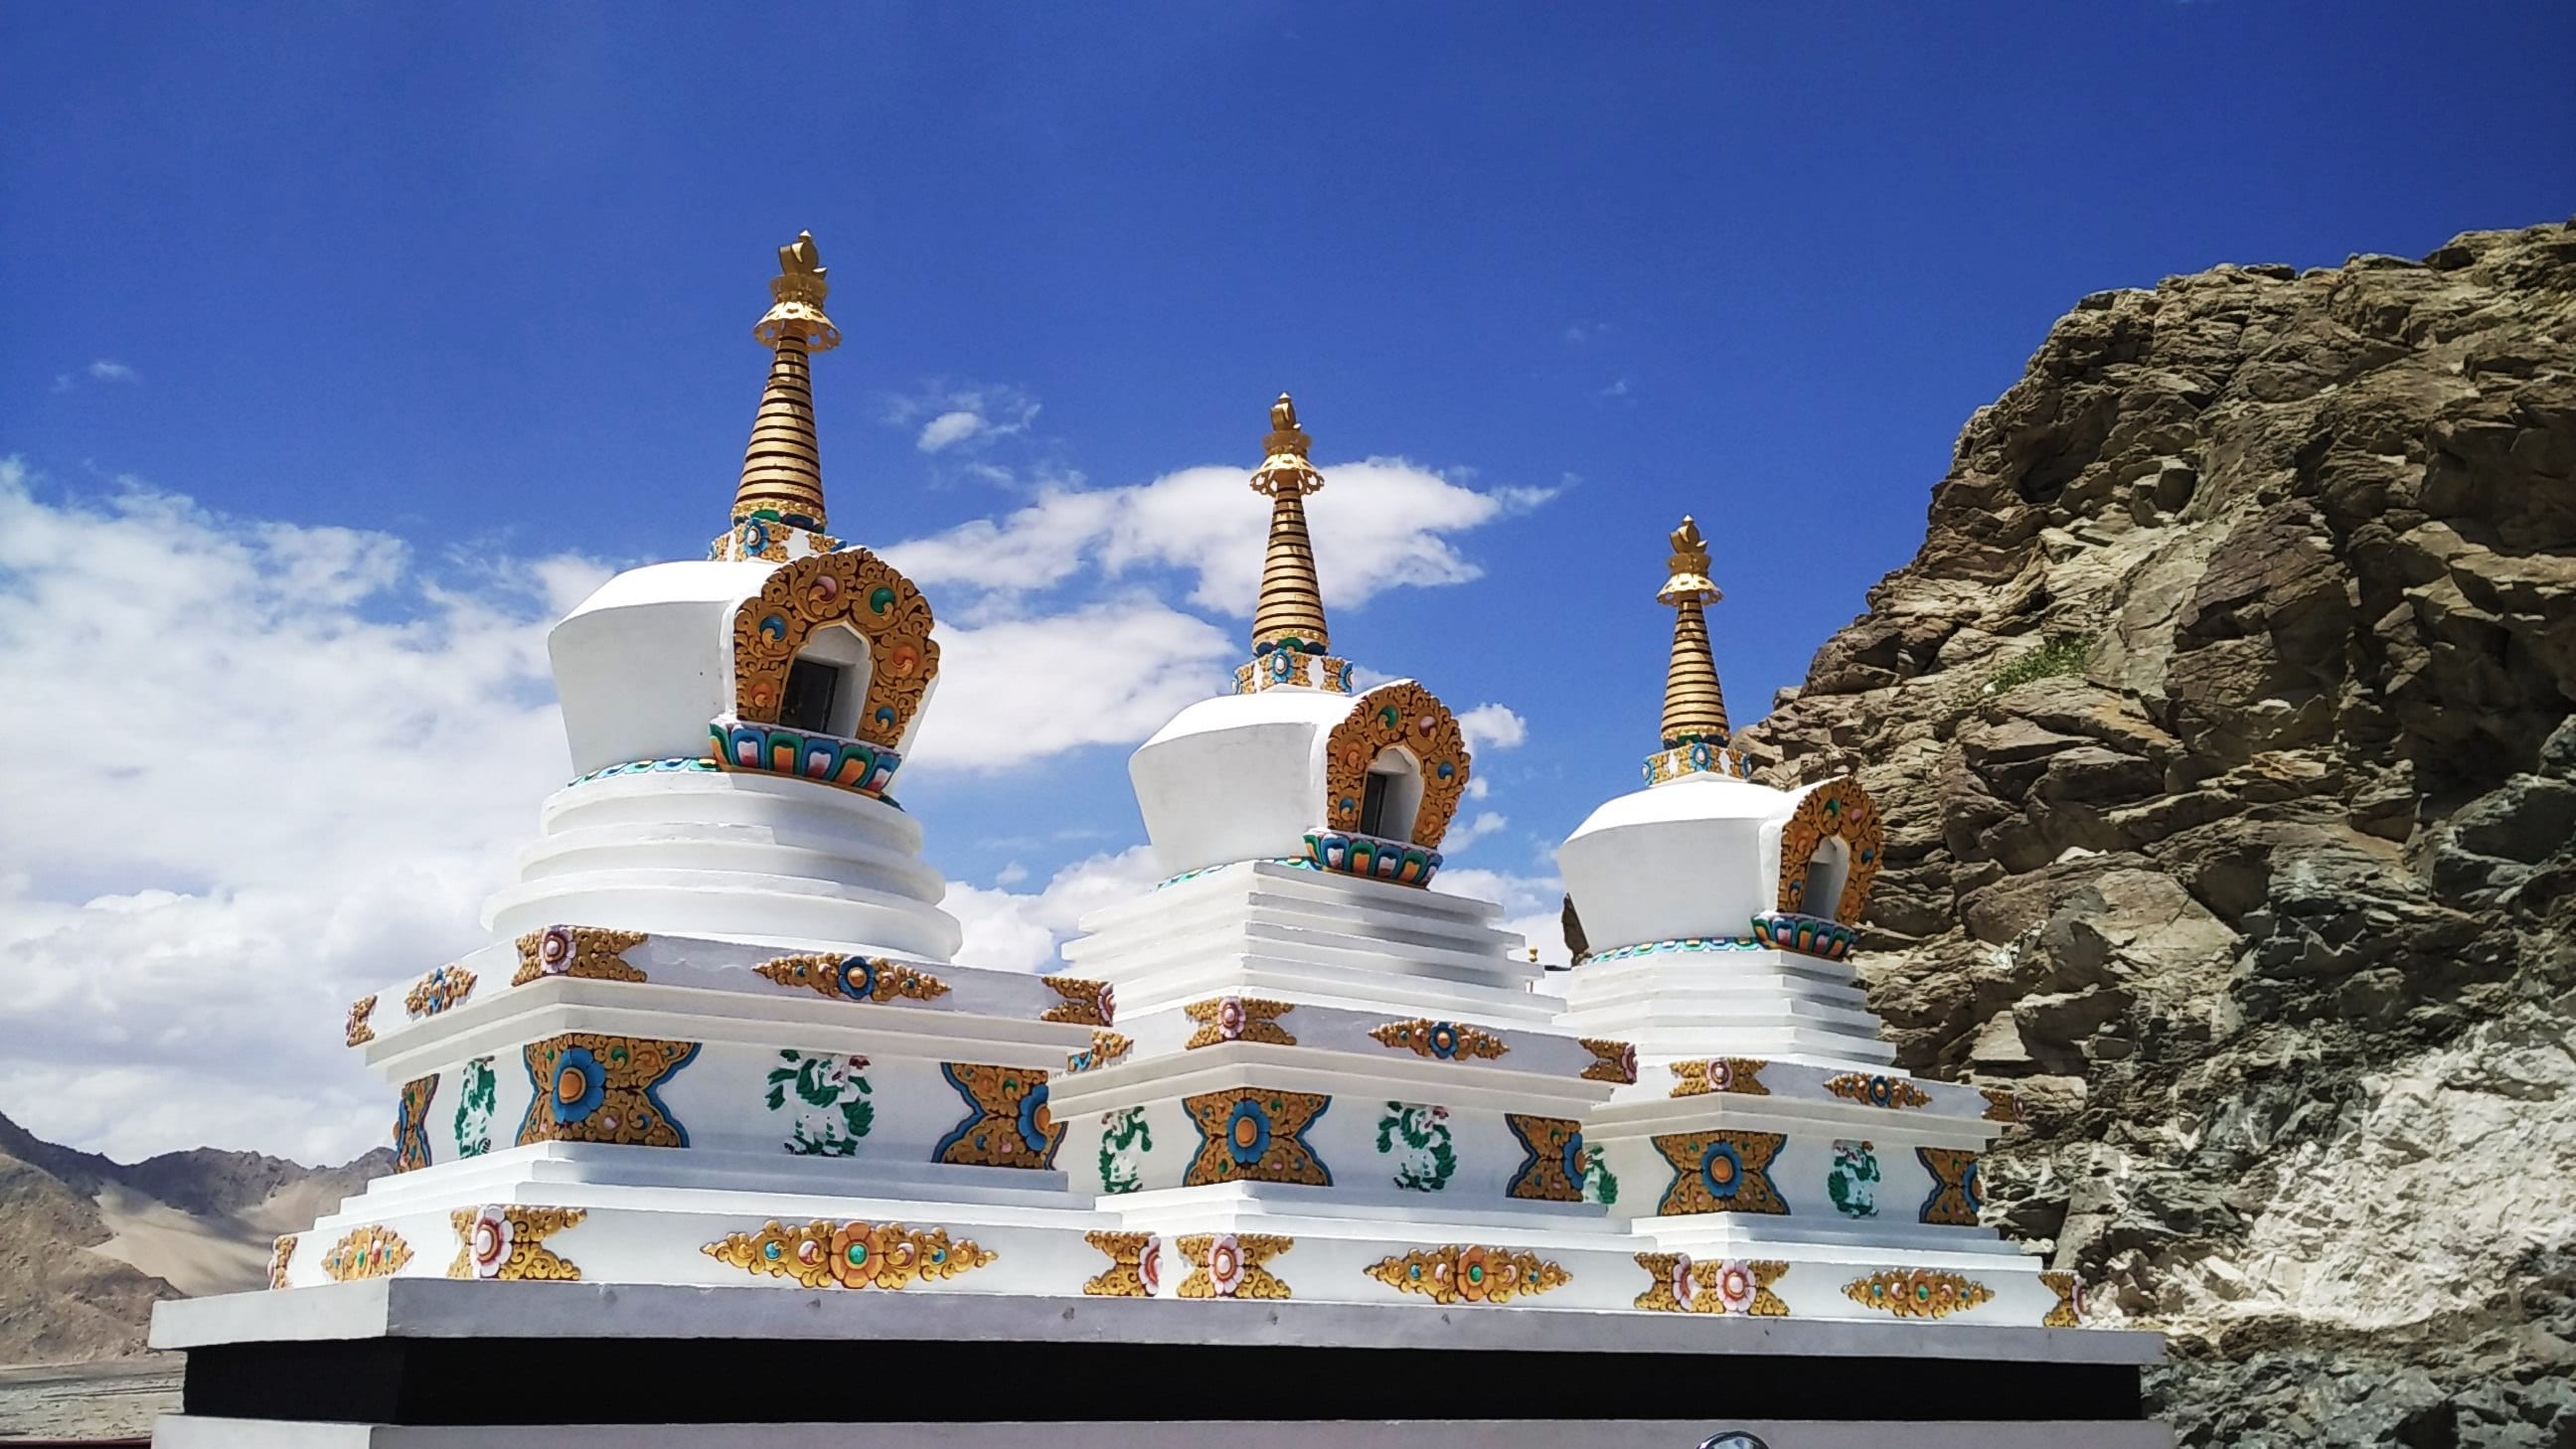 Ladakh - The Land of Monasteries